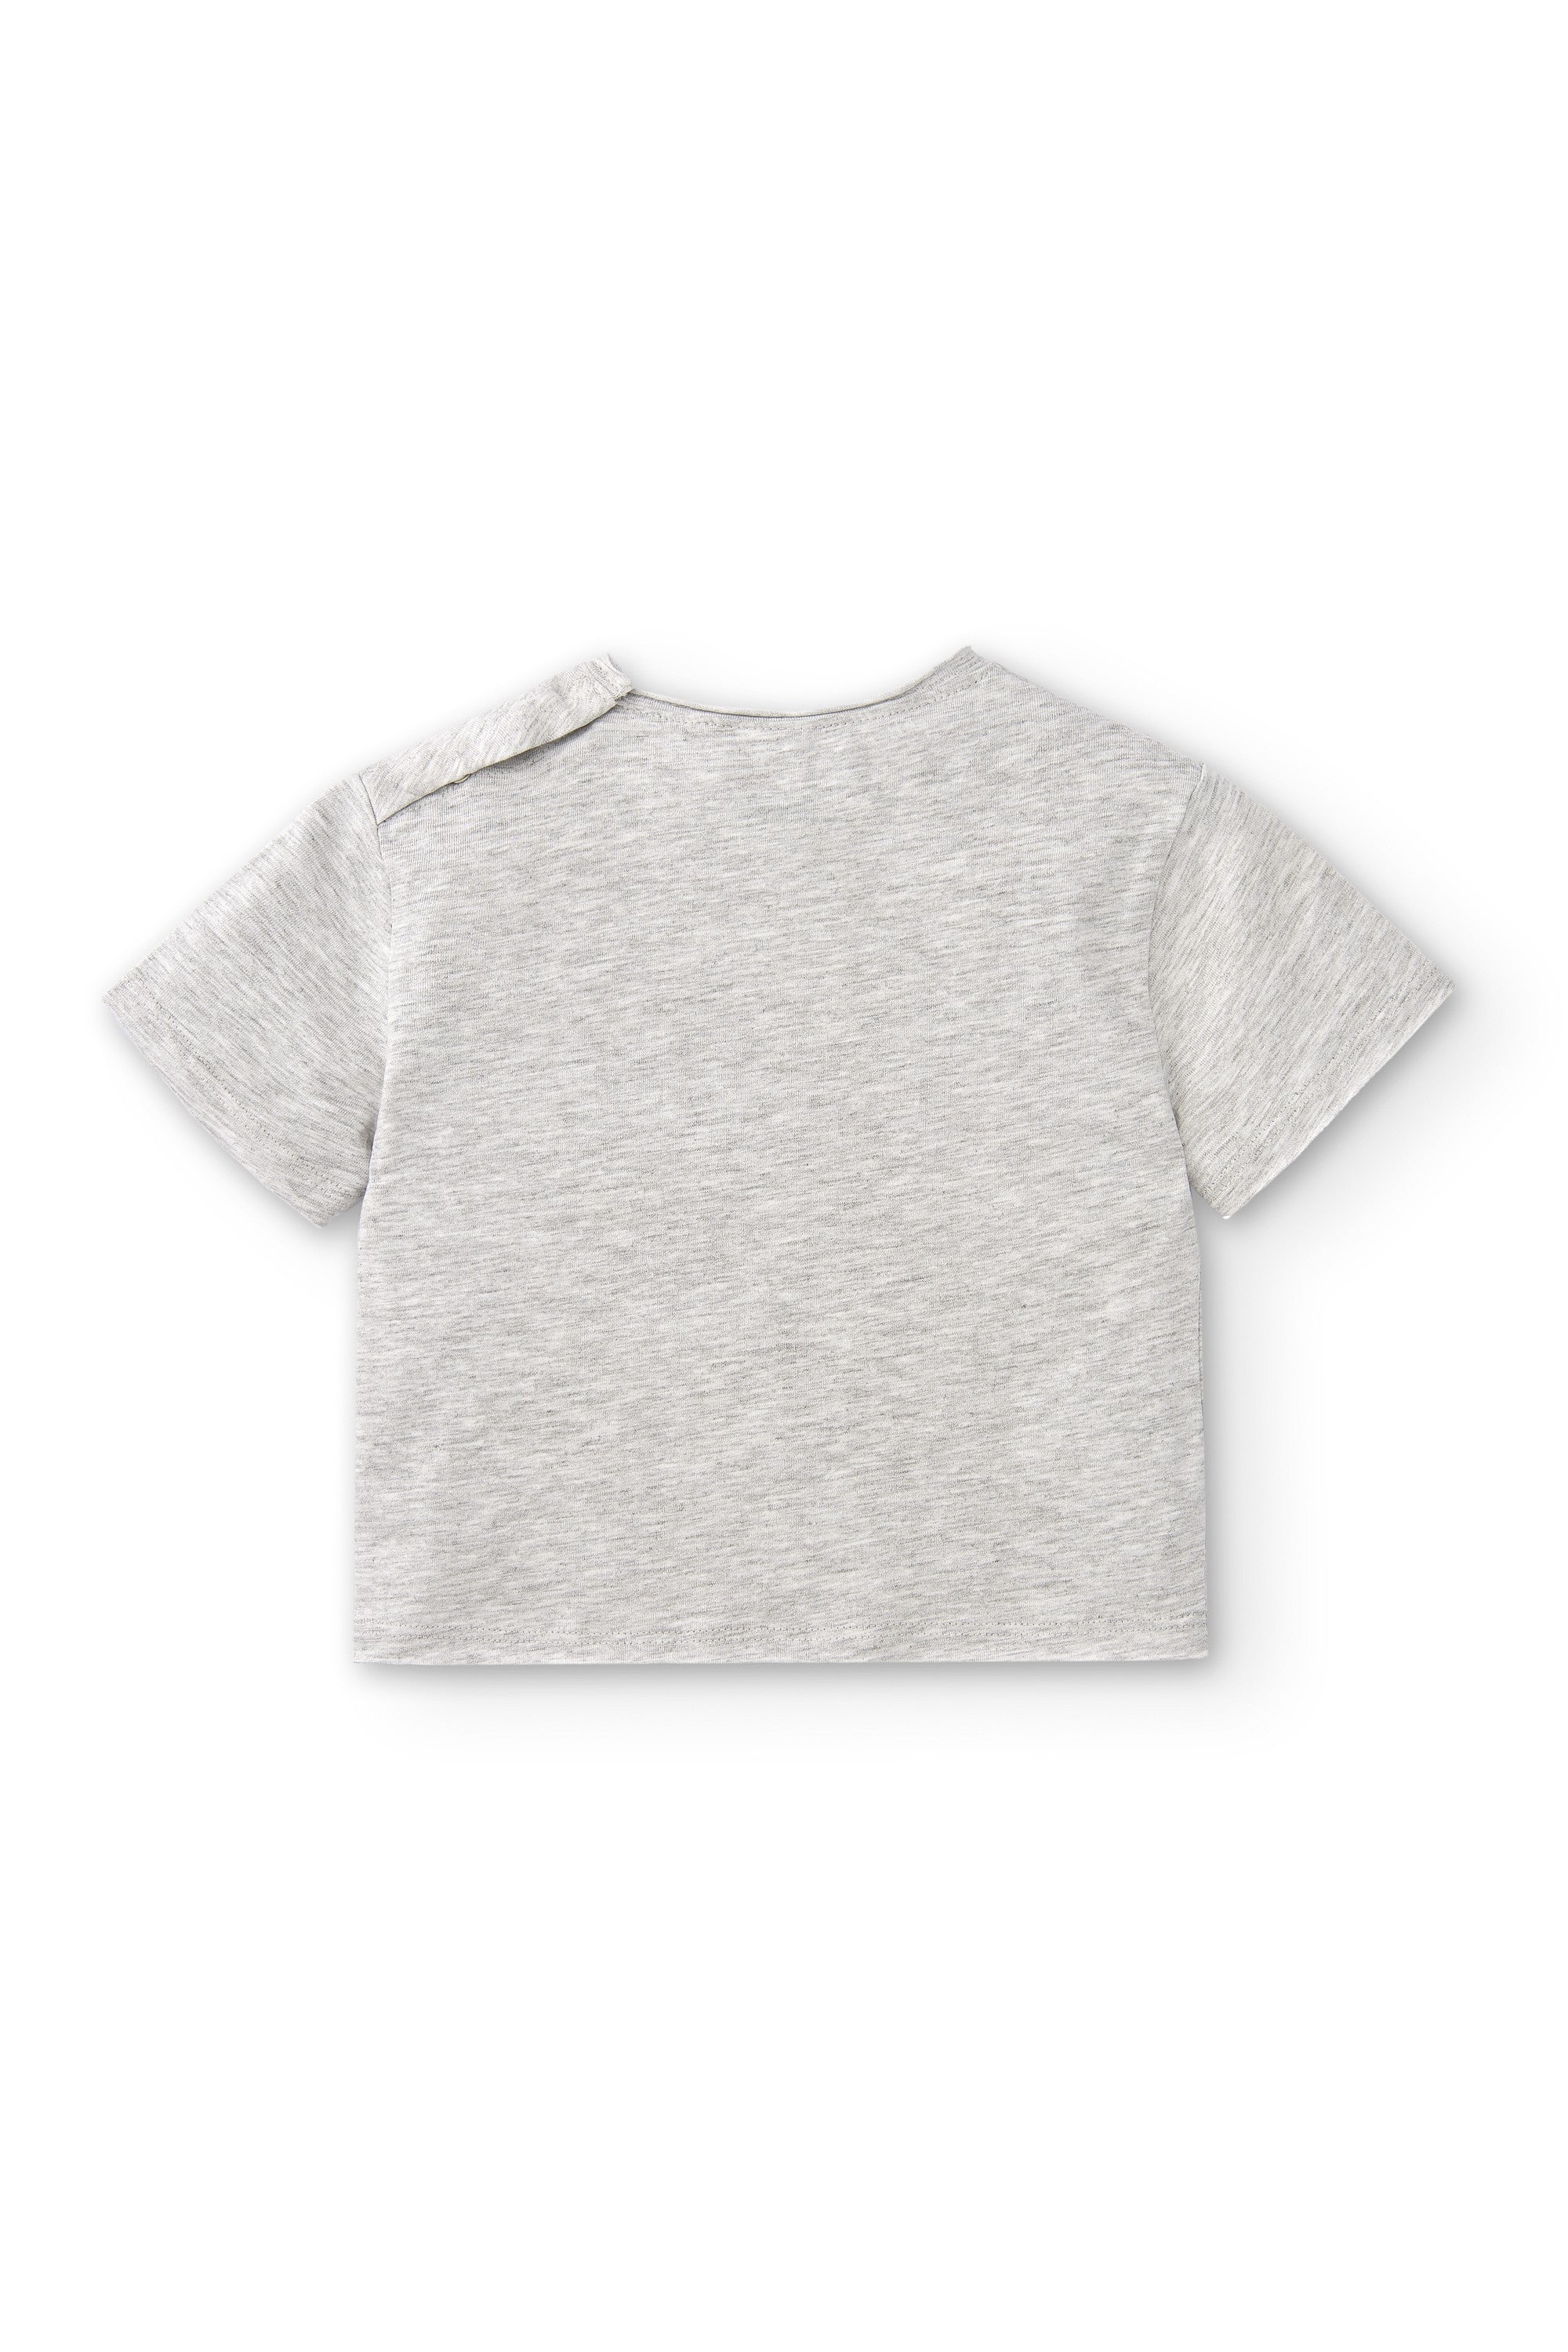 Camiseta de bebé gris VERANO/Outlet